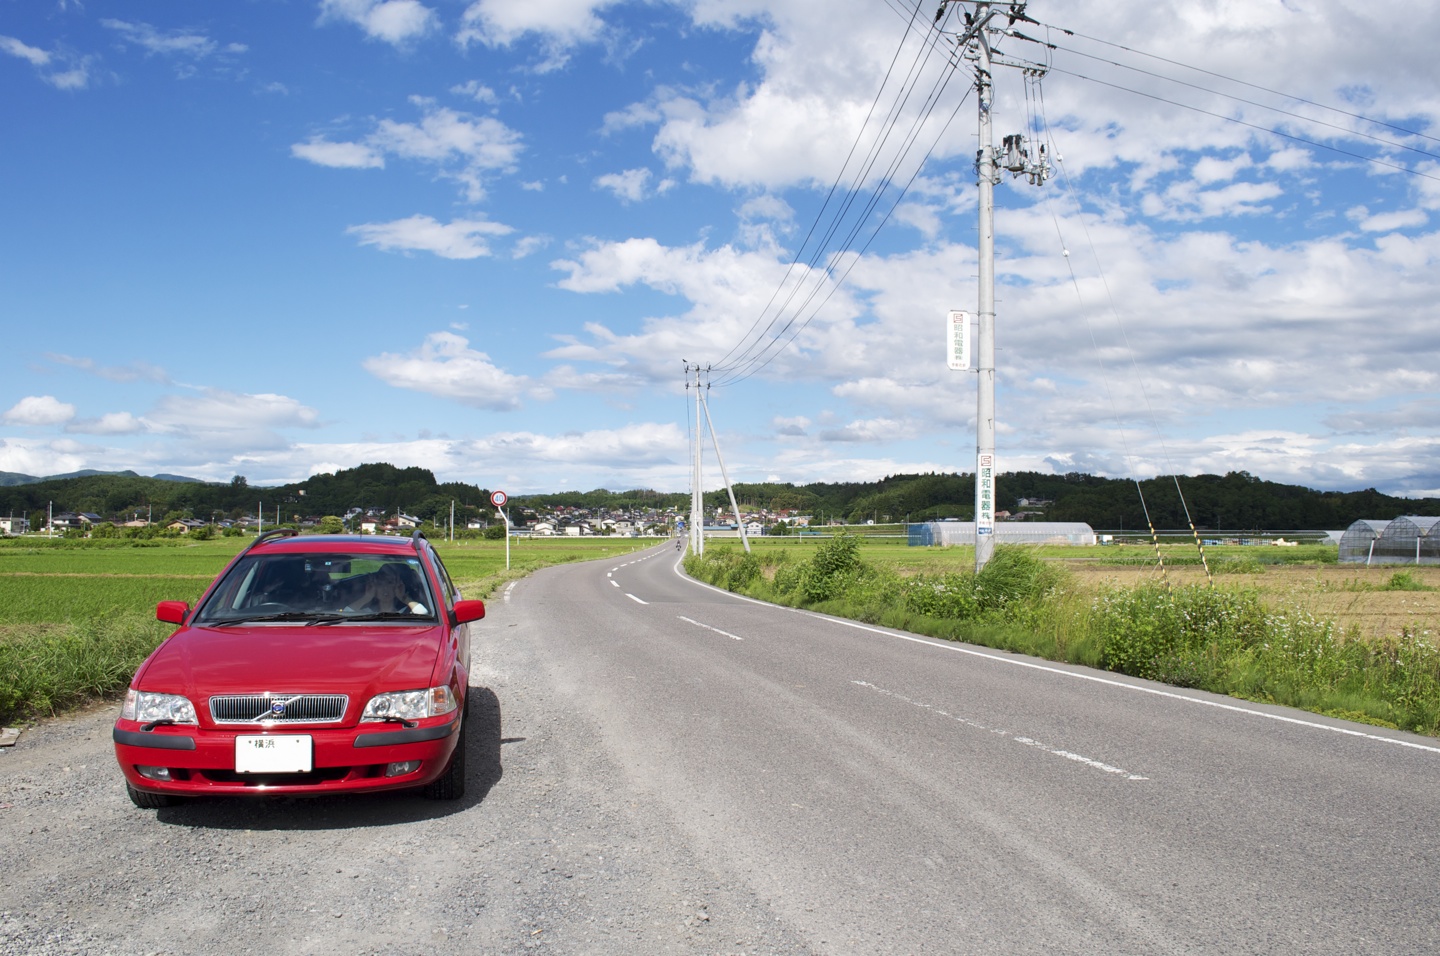 Fukushima pref. road 284